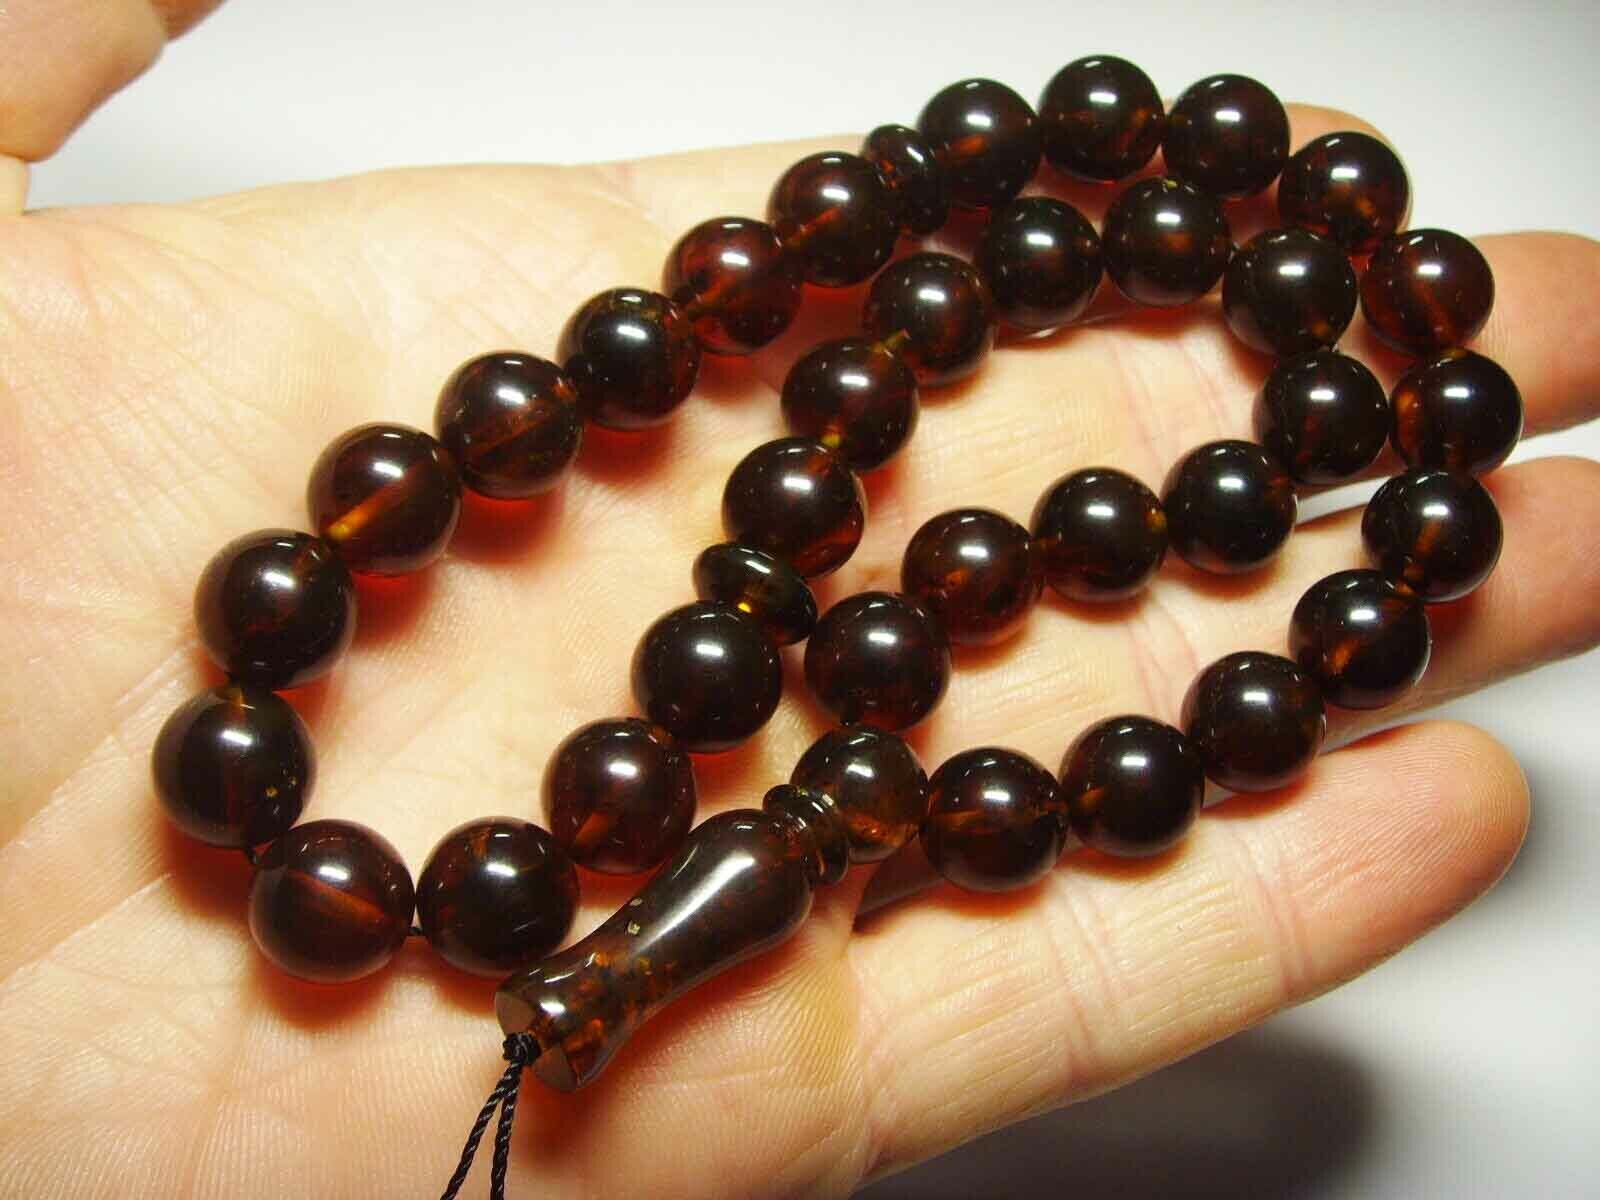 Islamic 33 Prayer beads Natura lBaltic Amber Tasbih pressed amber